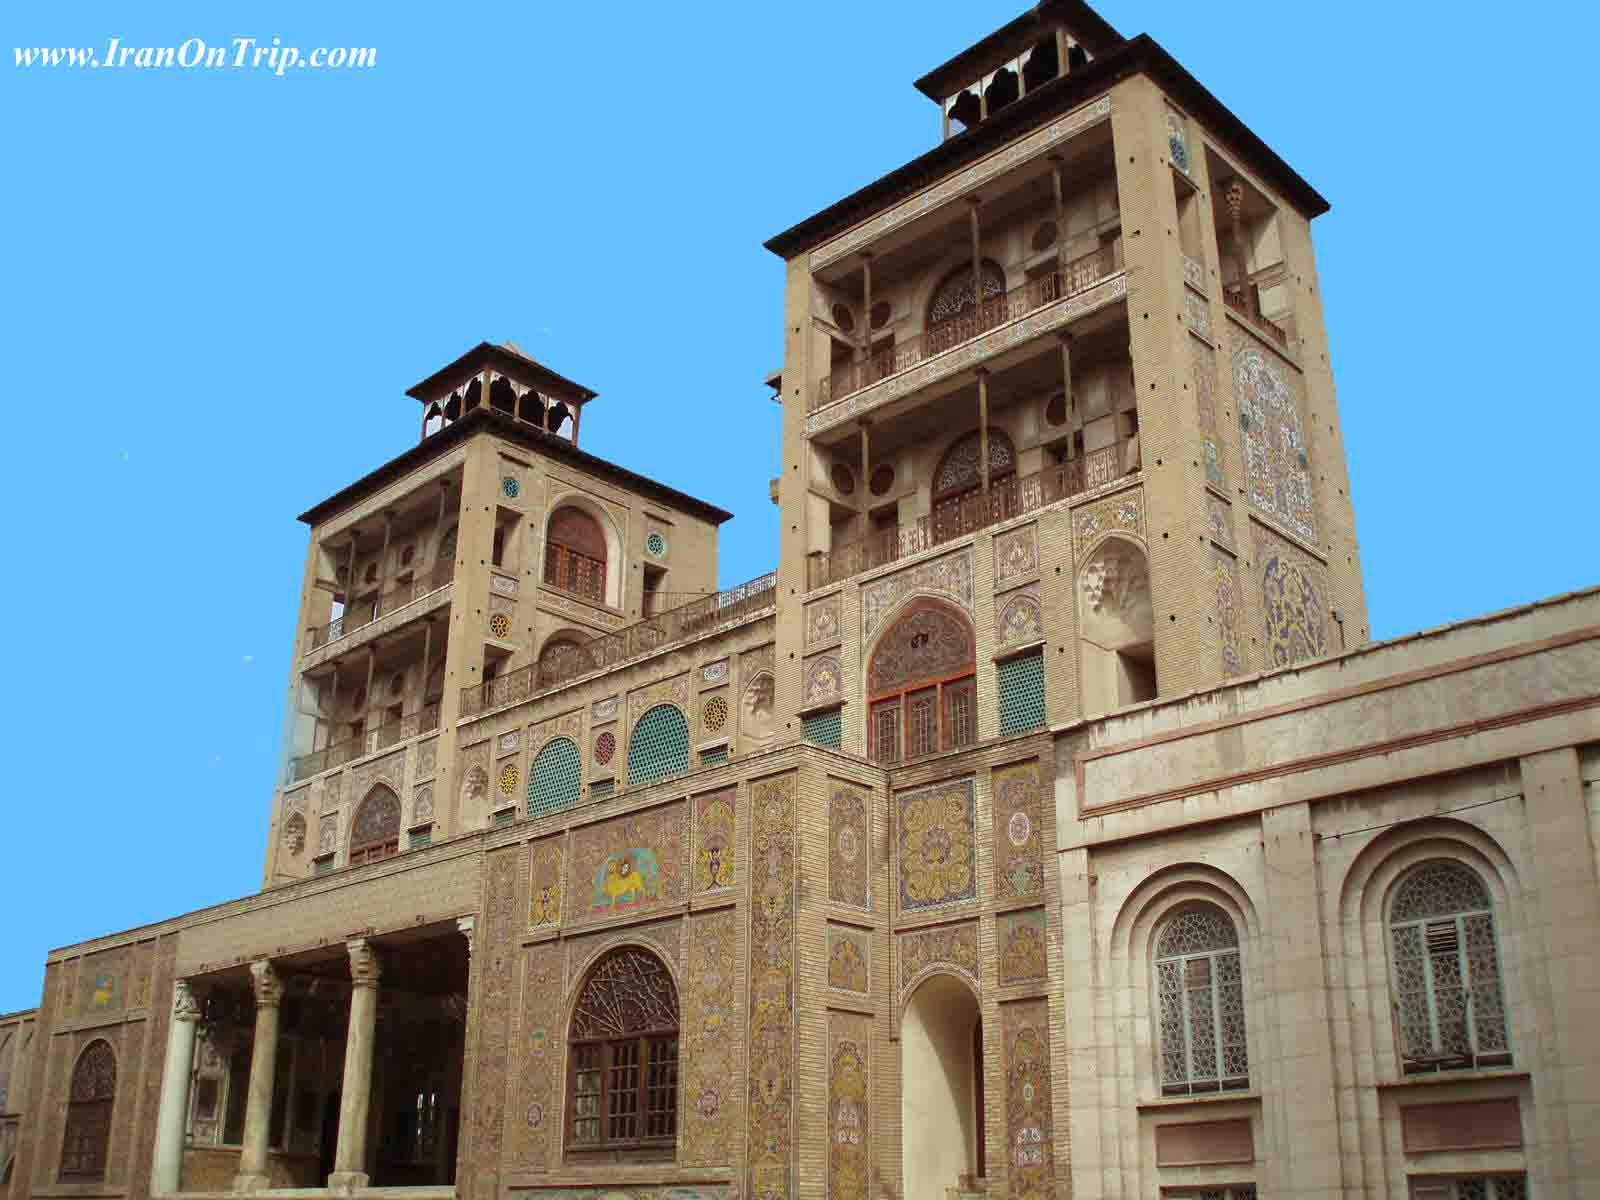 Golestan Palace in Iran - Tehran Province-Palaces of Iran